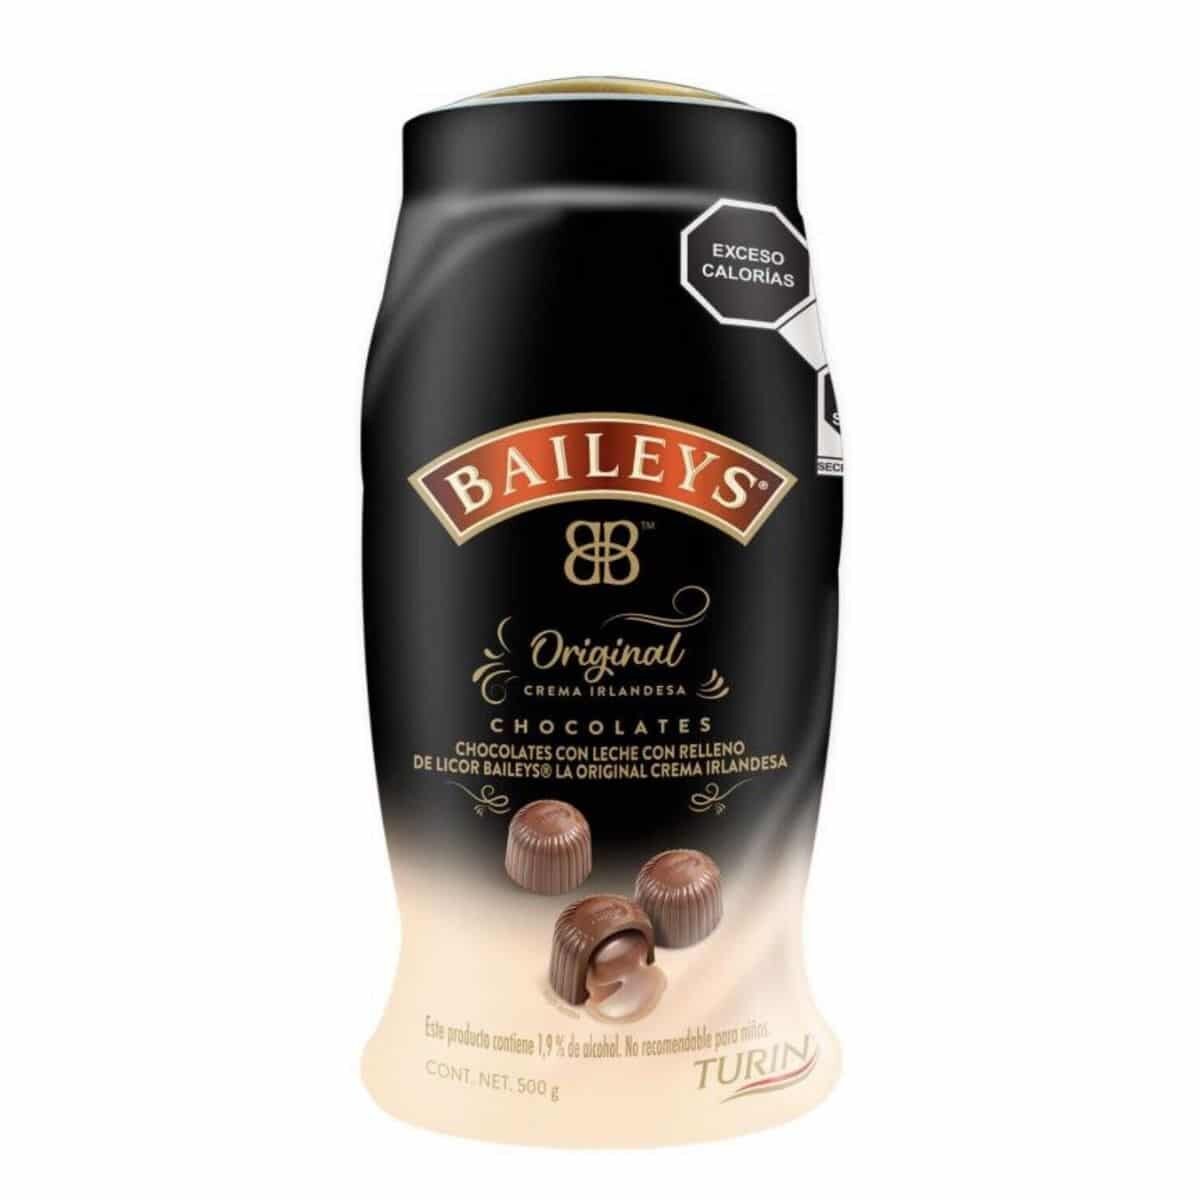 Socola nhân Baileys Original Irish Cream Chocolate Turin filled with